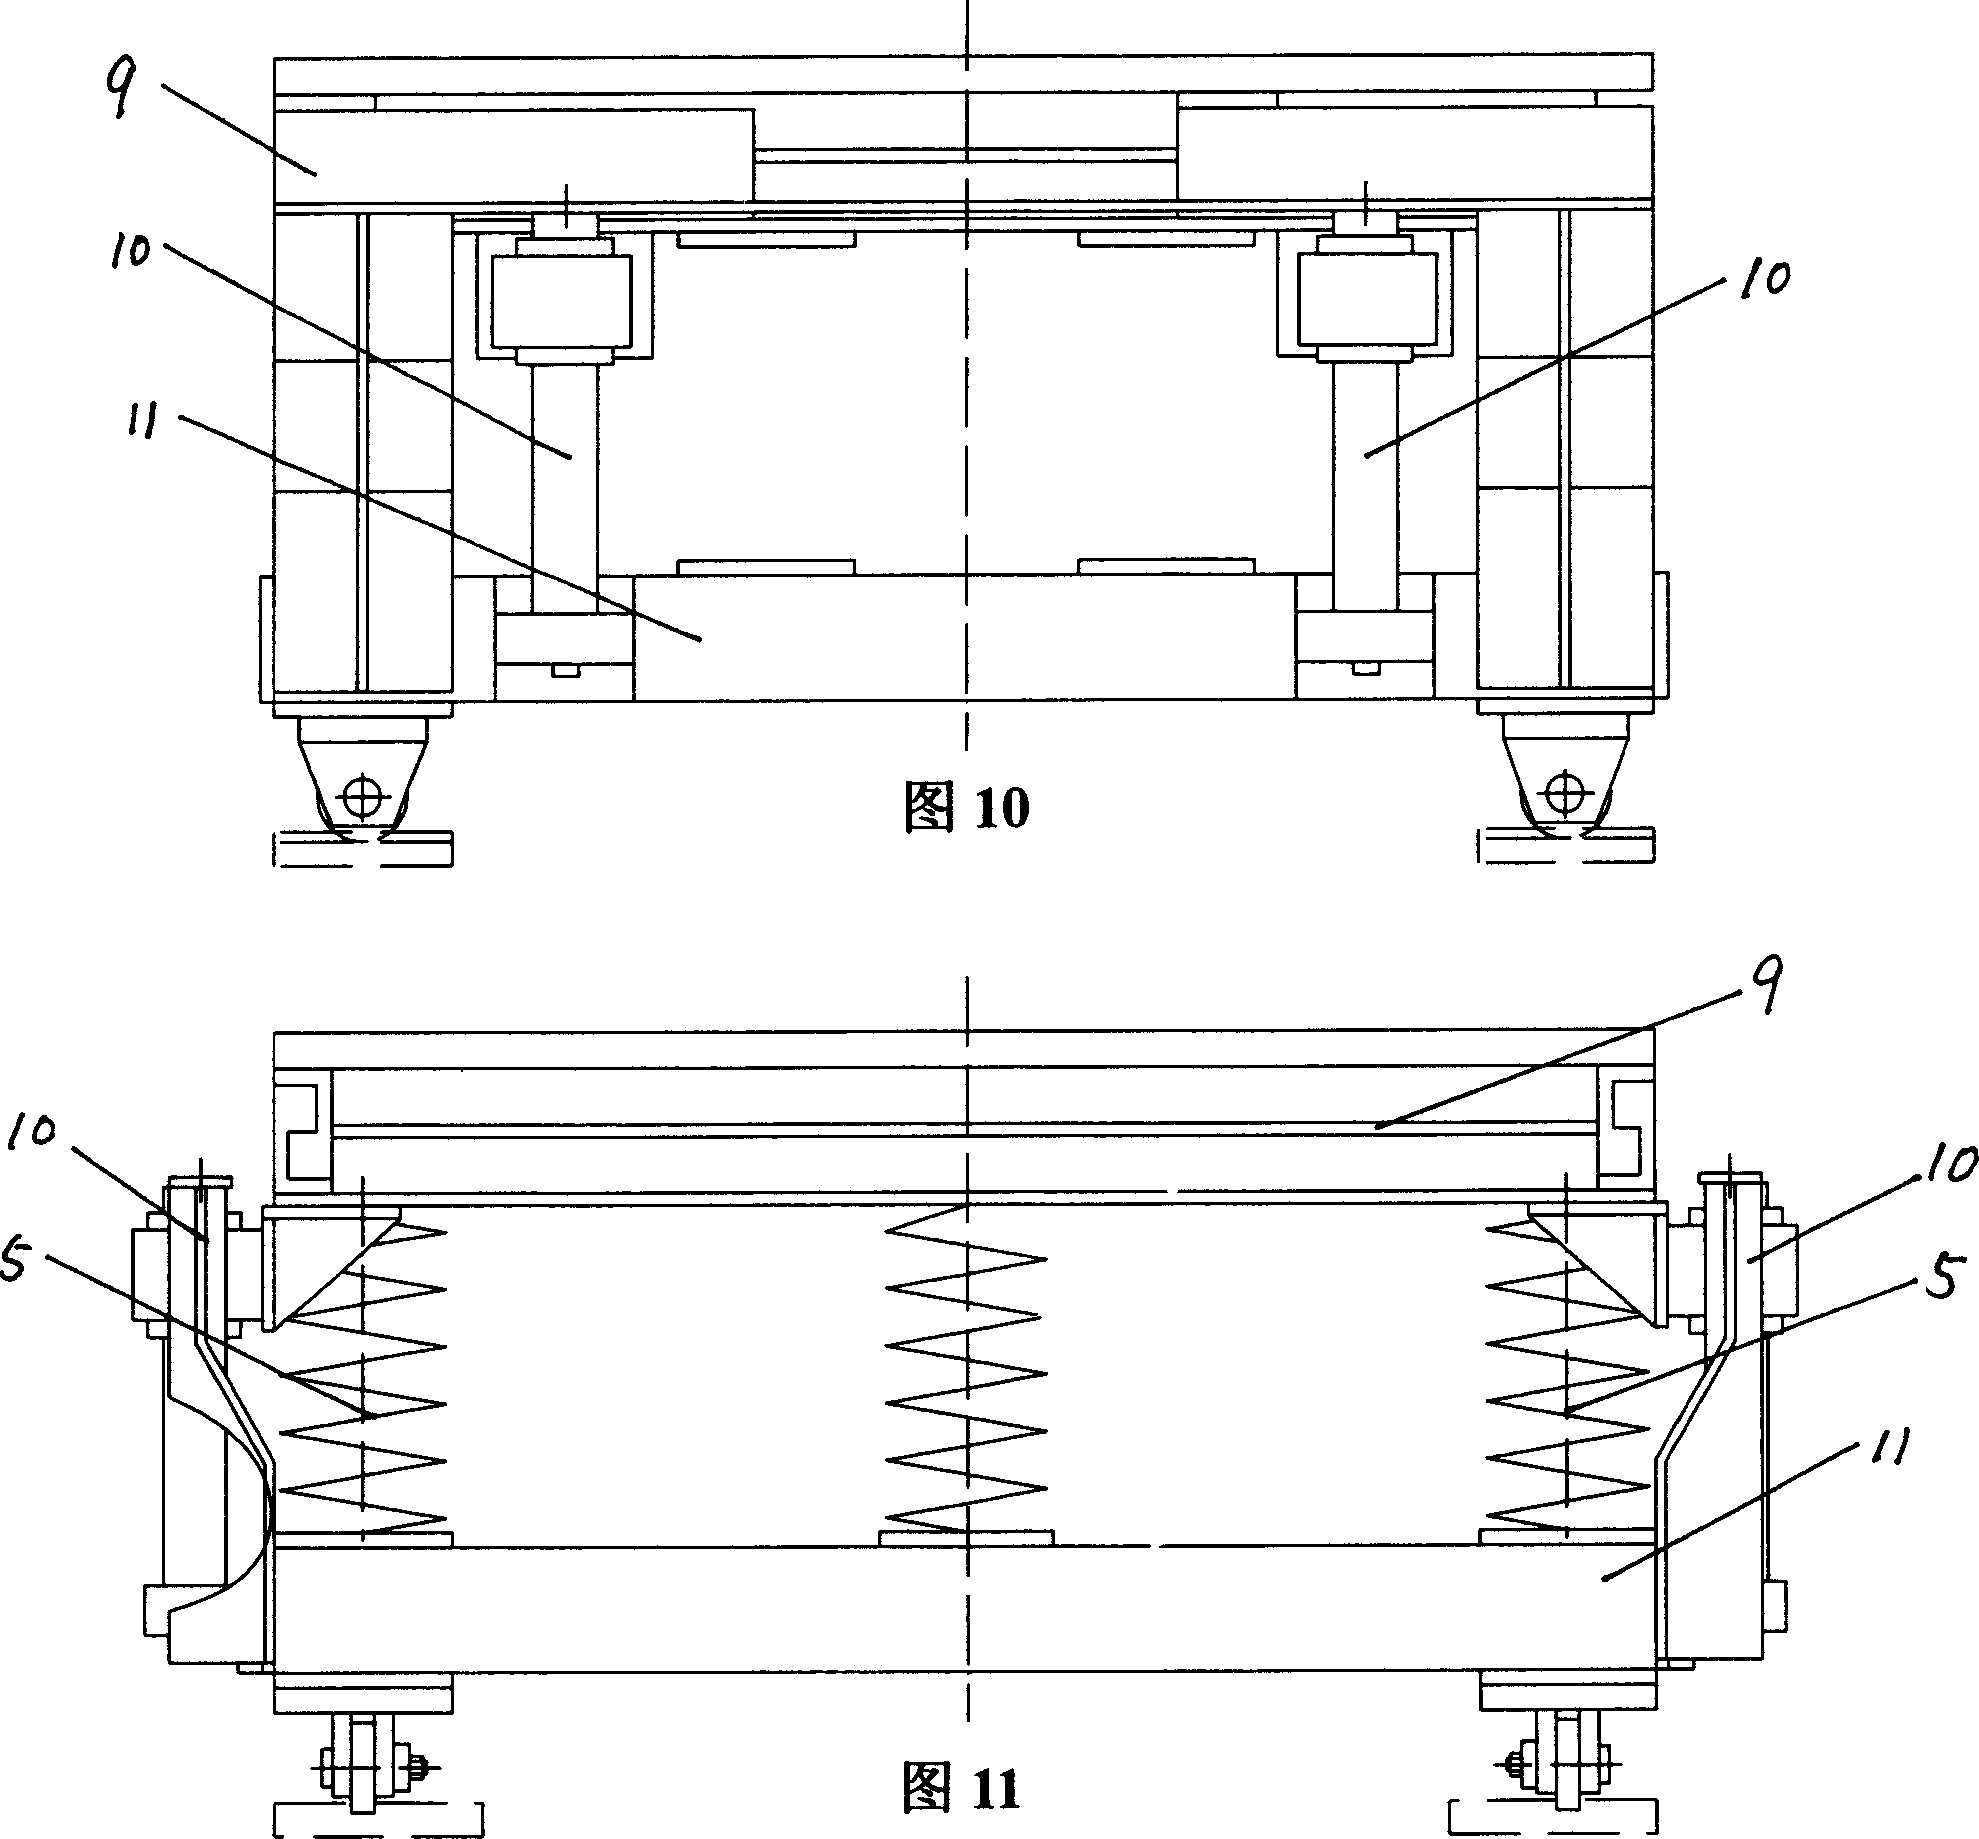 Seismic vibrating analog method and spring seismic analog vibrating stand